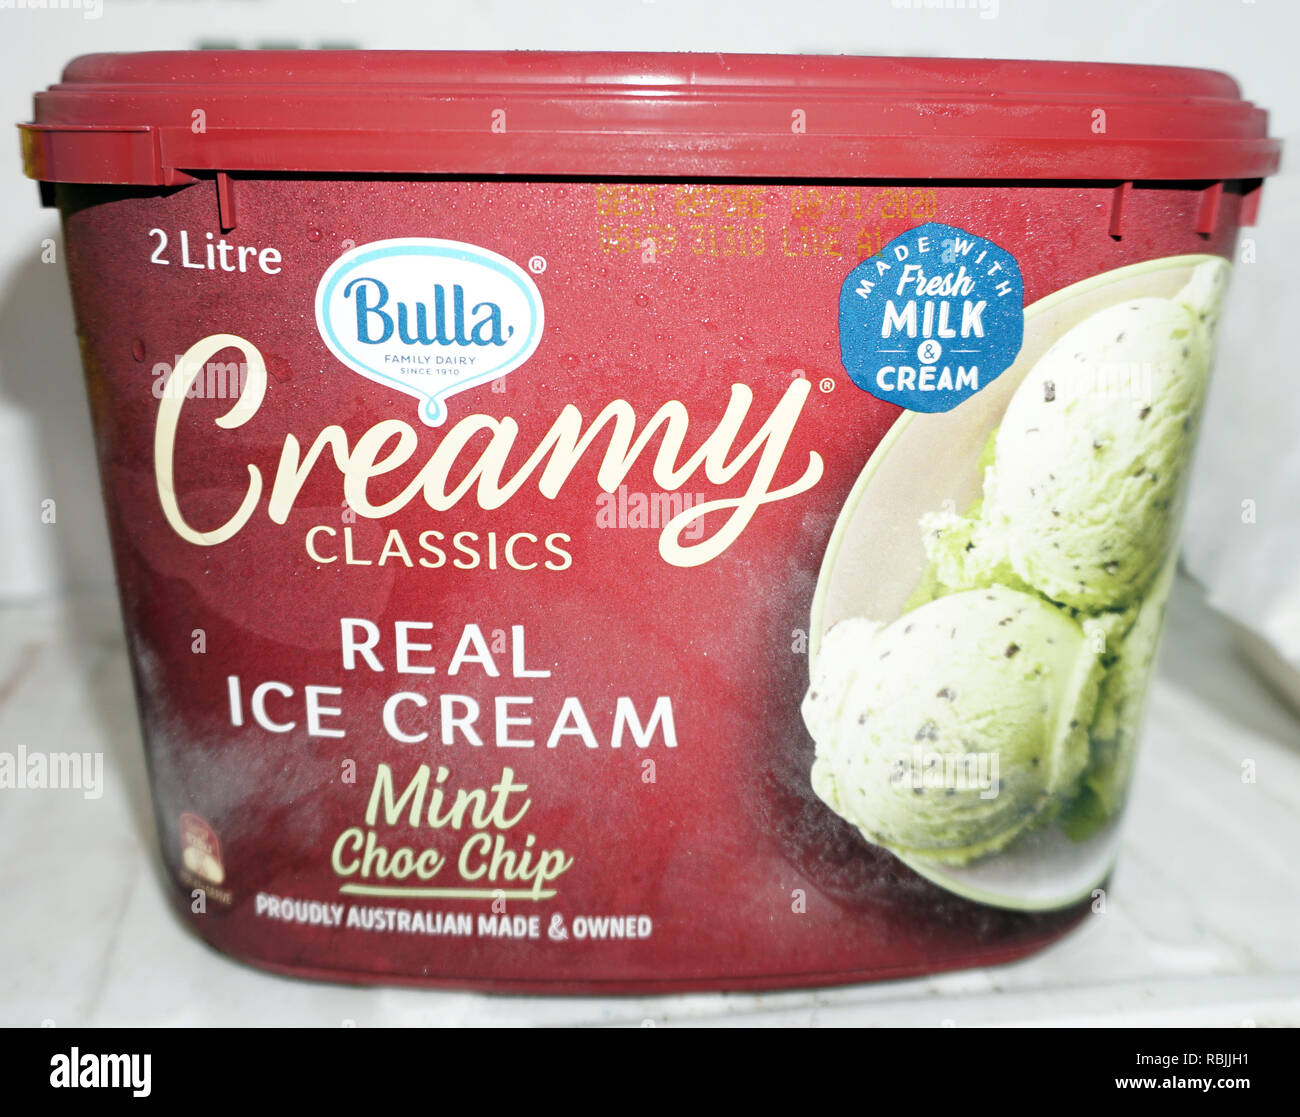 https://c8.alamy.com/comp/RBJJH1/bulla-creamy-classics-ice-cream-mint-choc-chip-2l-tub-RBJJH1.jpg